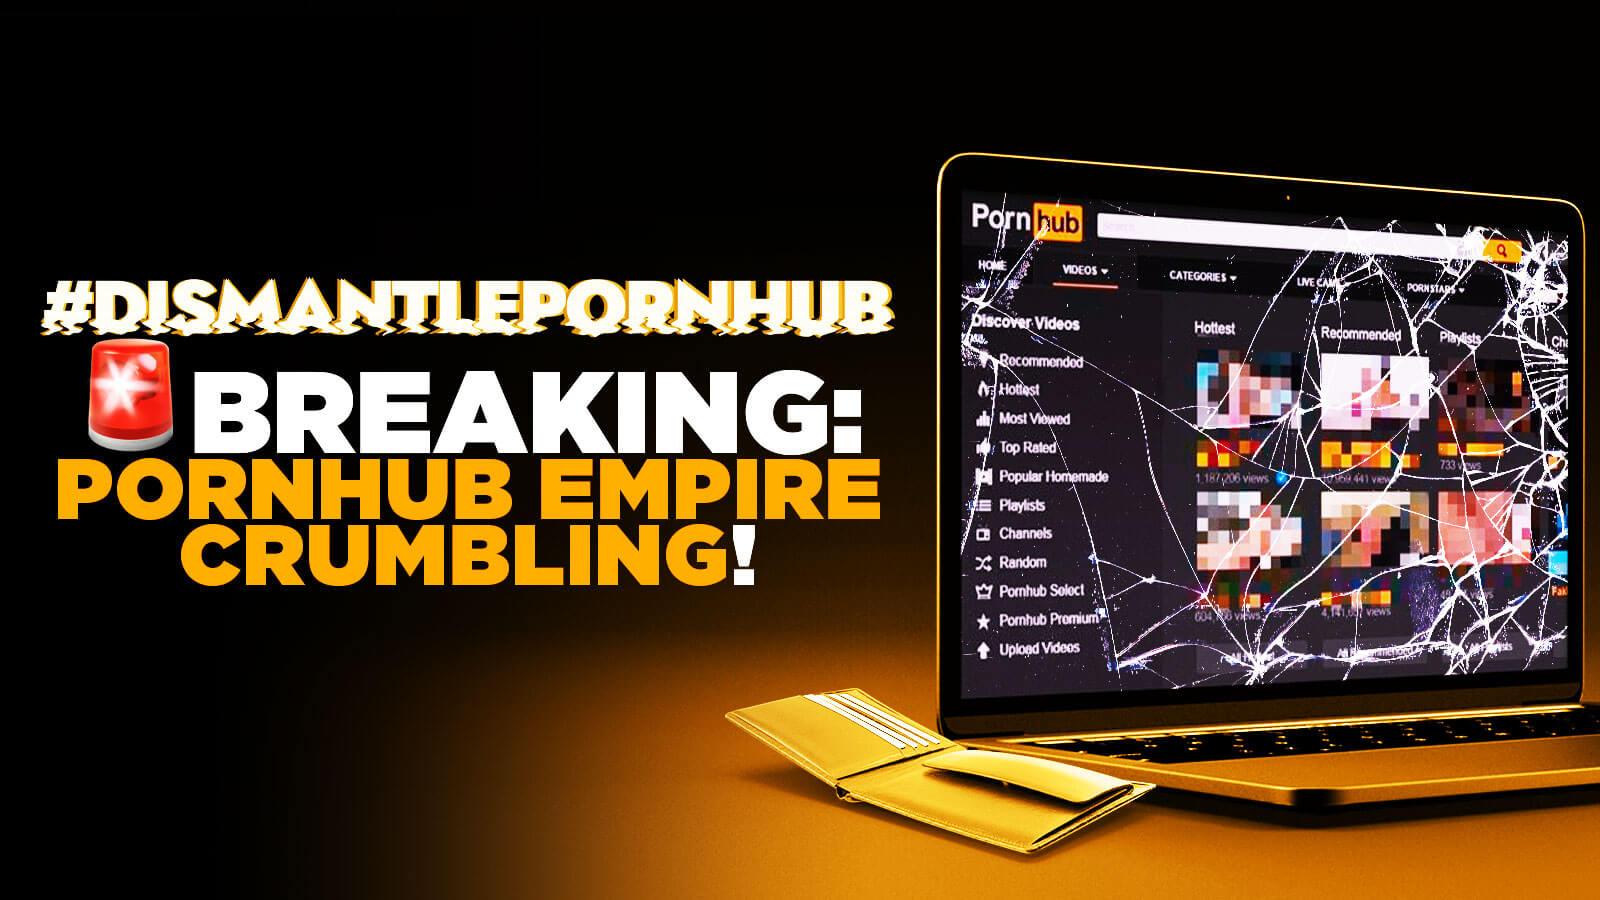 Best Videos Porn Hub Pornhub Pornography Empire is Crumbling